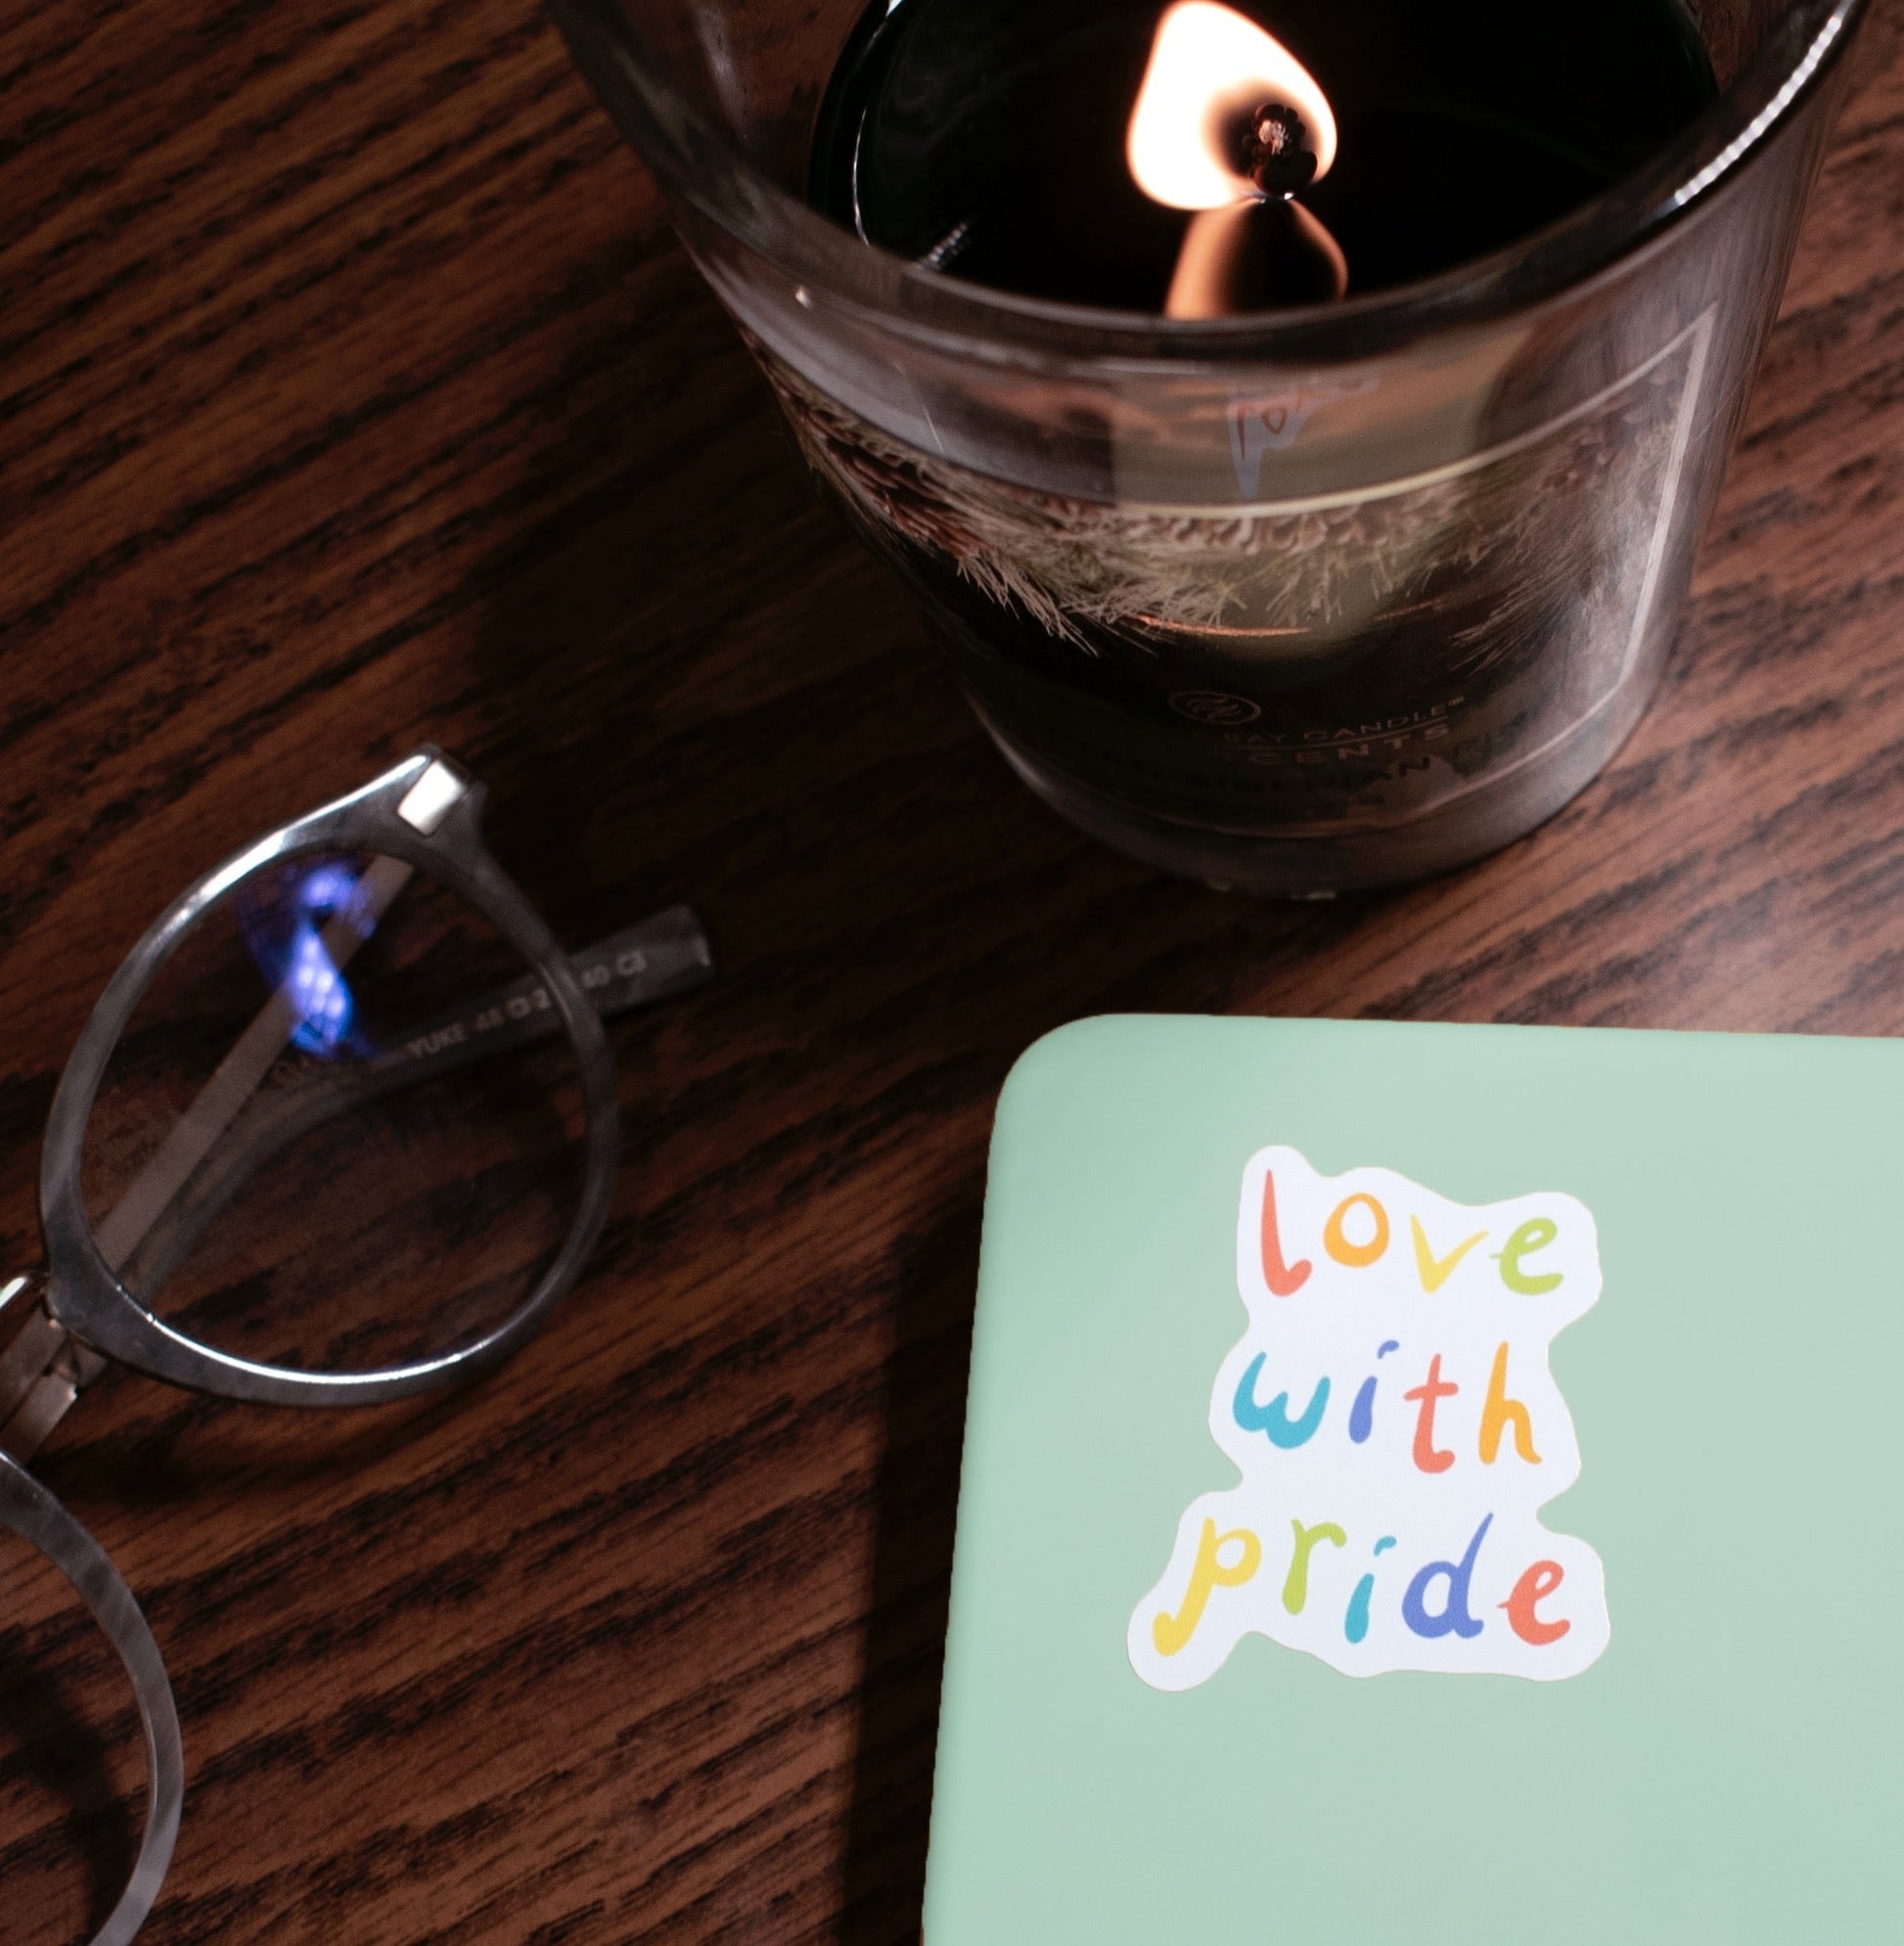 Love With Pride | Sticker - Love With Pride Apparel